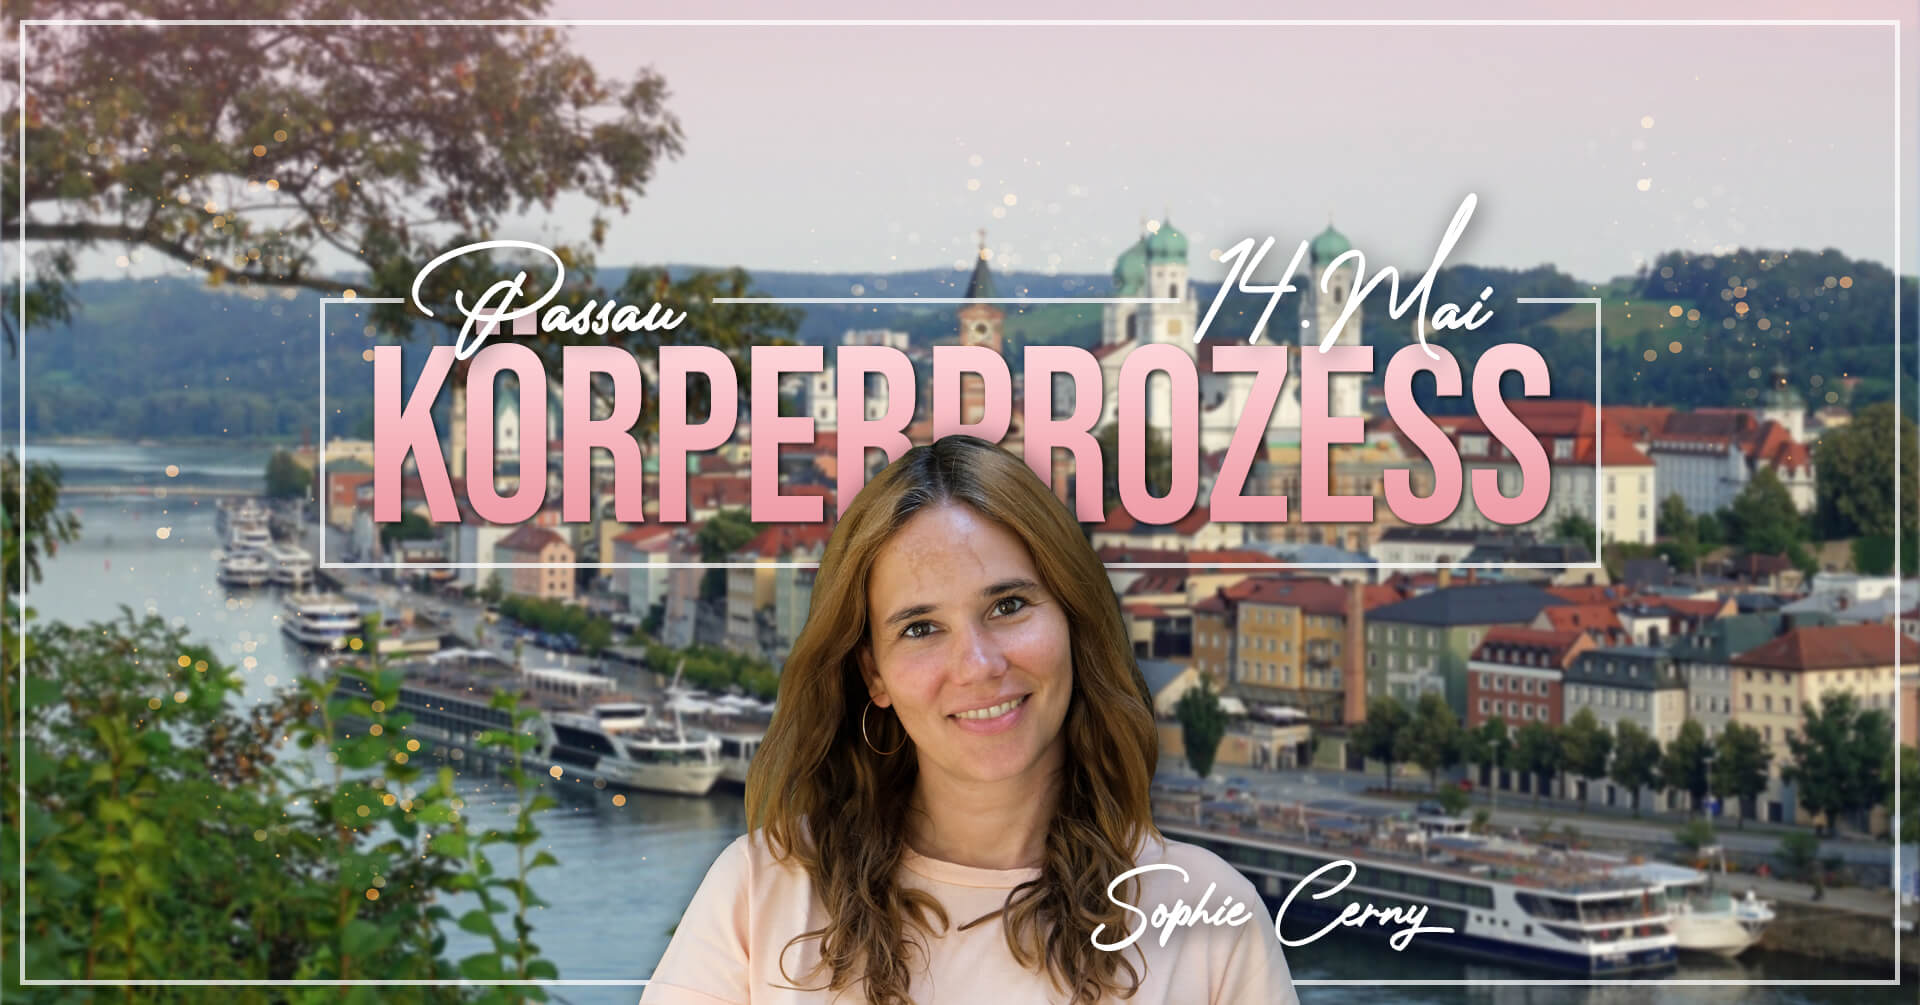 Access Körperprozess Passau Sophie Cerny